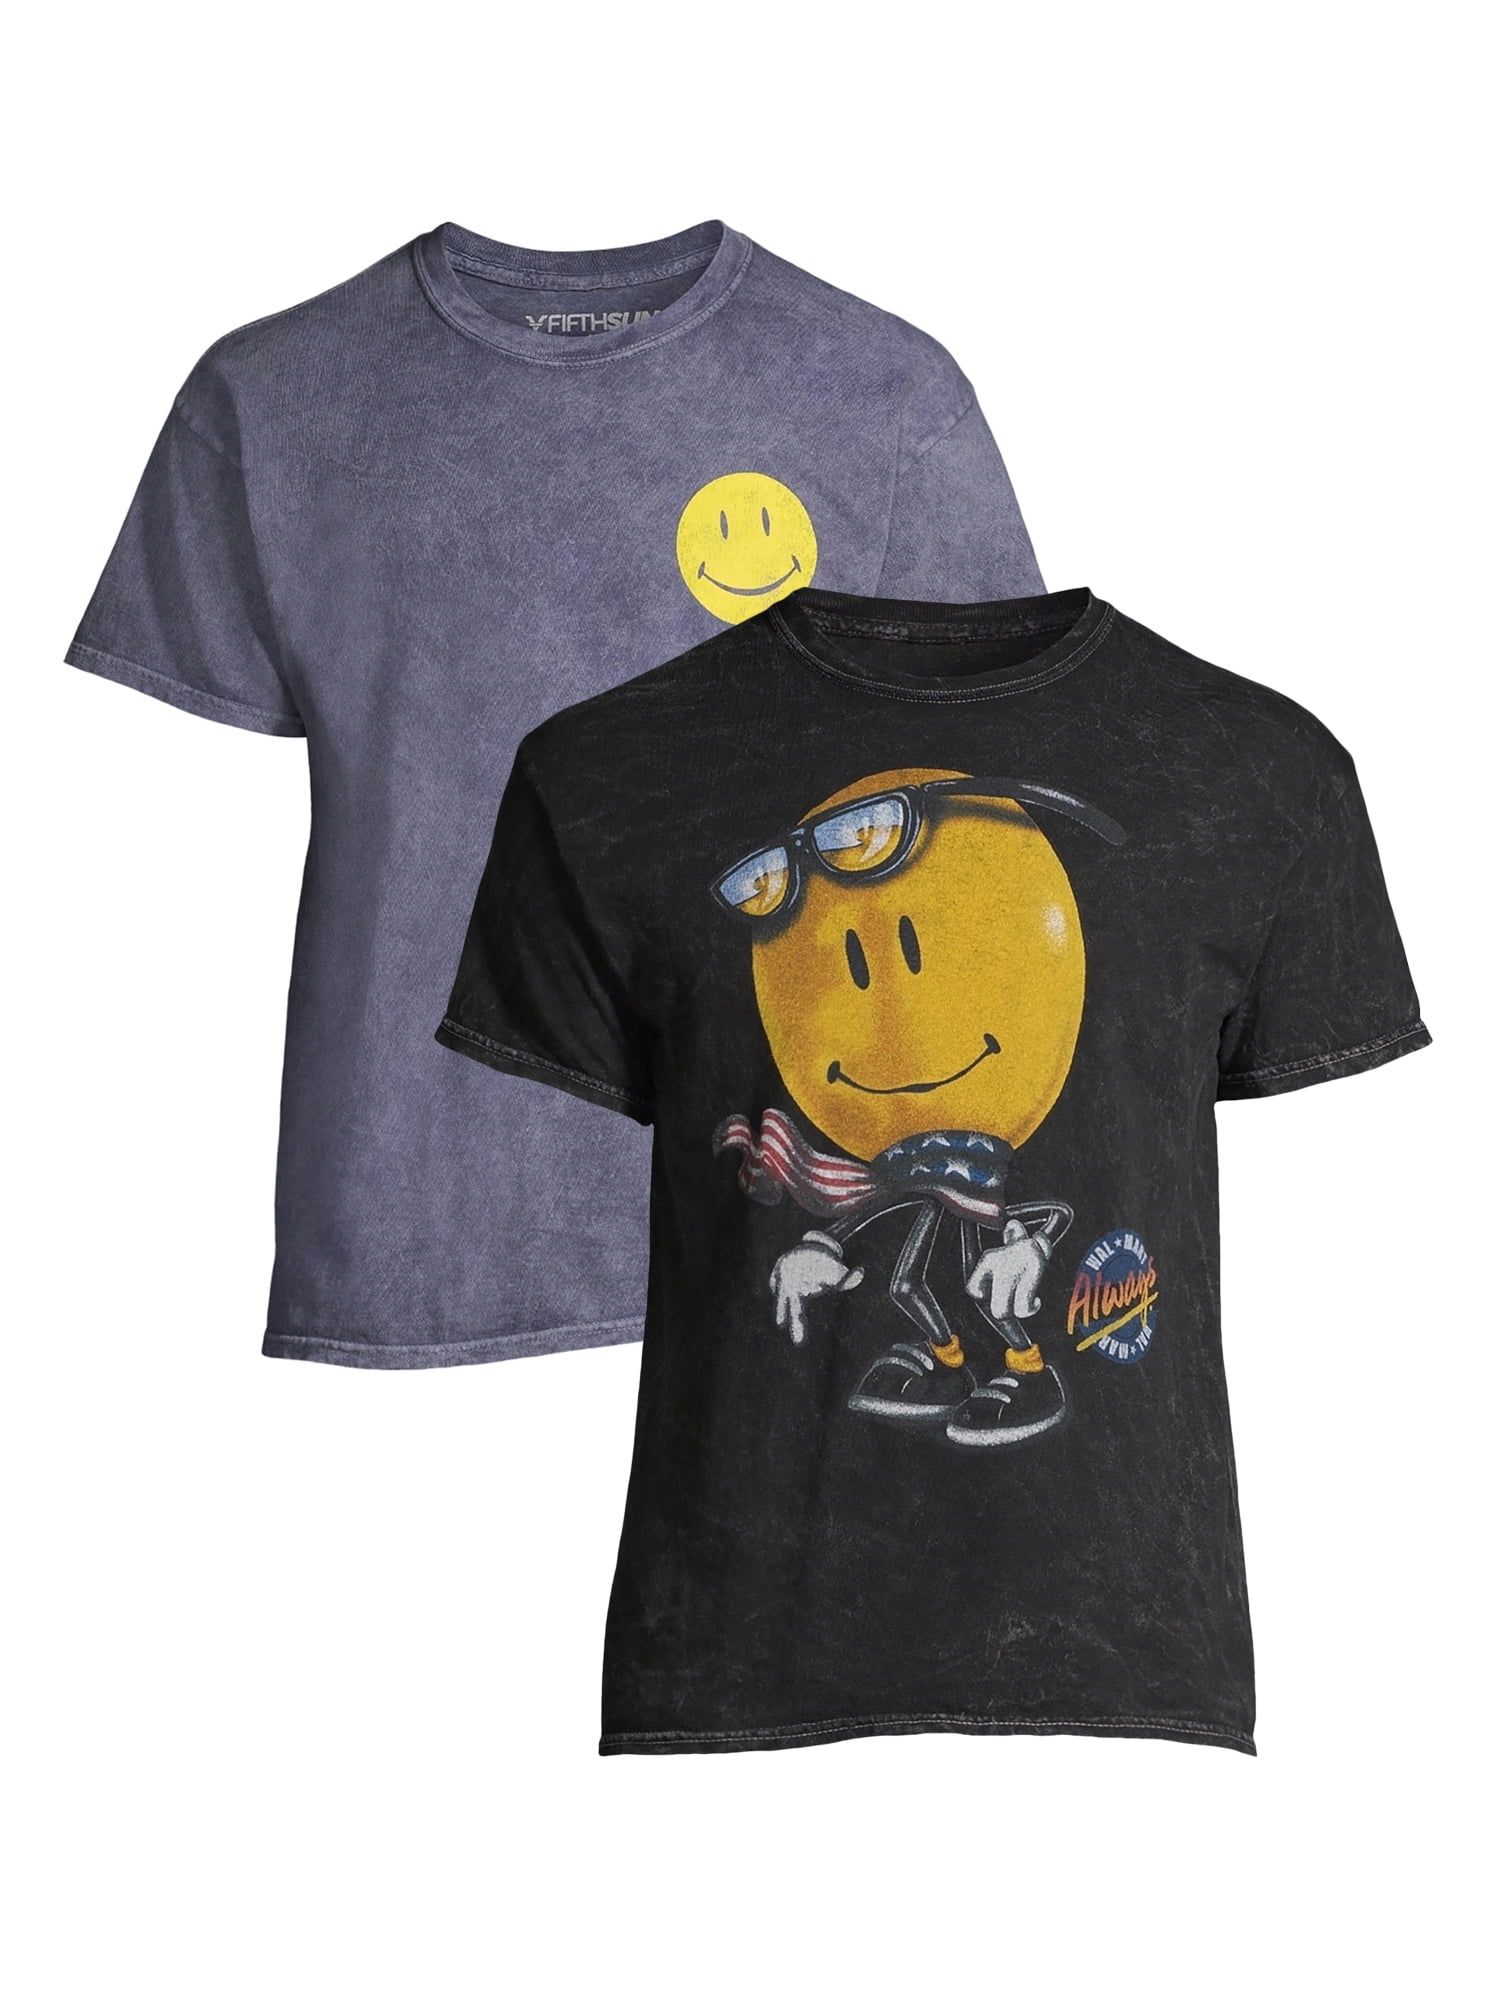 Walmart and Big Men's Yellow Smiley & American Graphic T-Shirts, Walmart.com